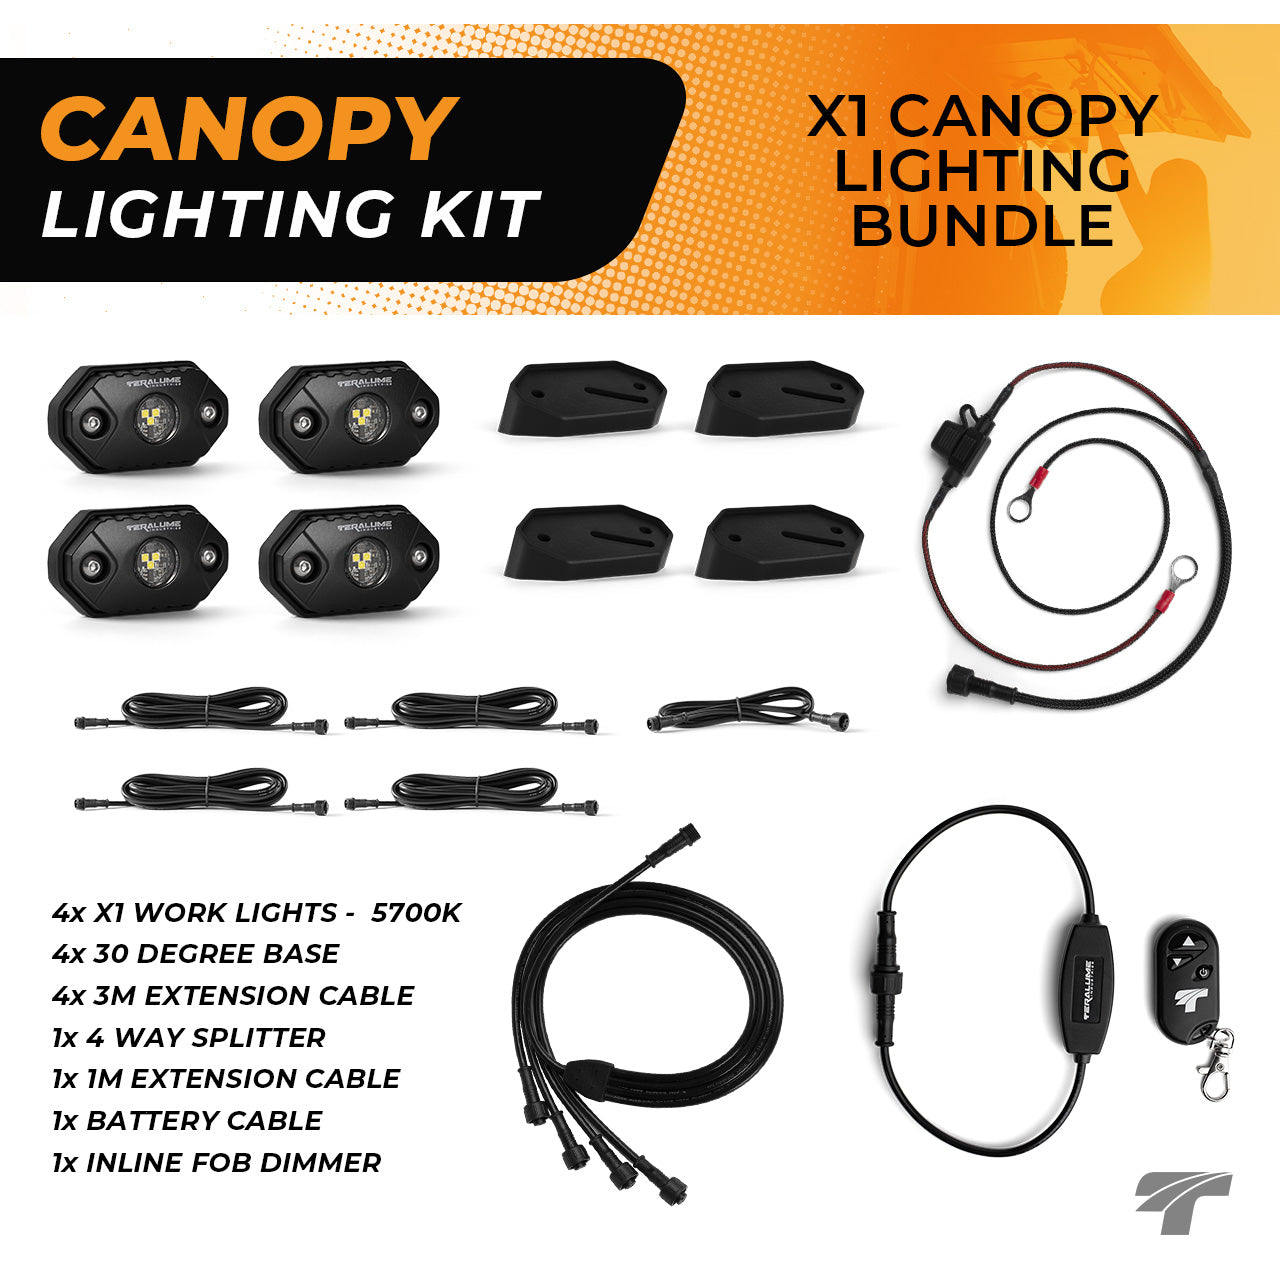 X1 Canopy Lighting Kit